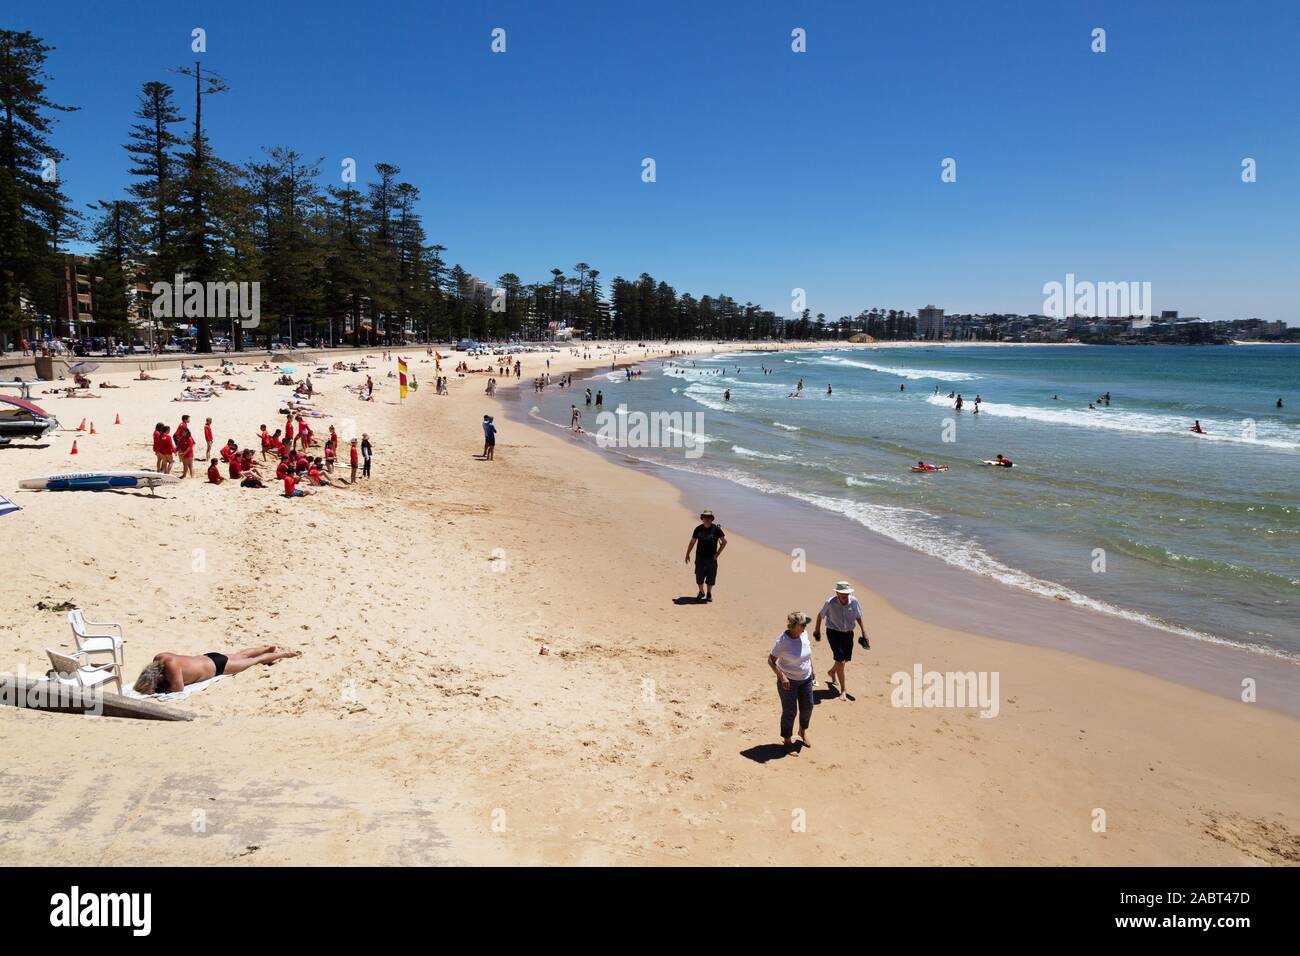 Sydney Beach - people on the beach on a sunny day in November; Manly Beach, Manly, Sydney Australia Stock Photo